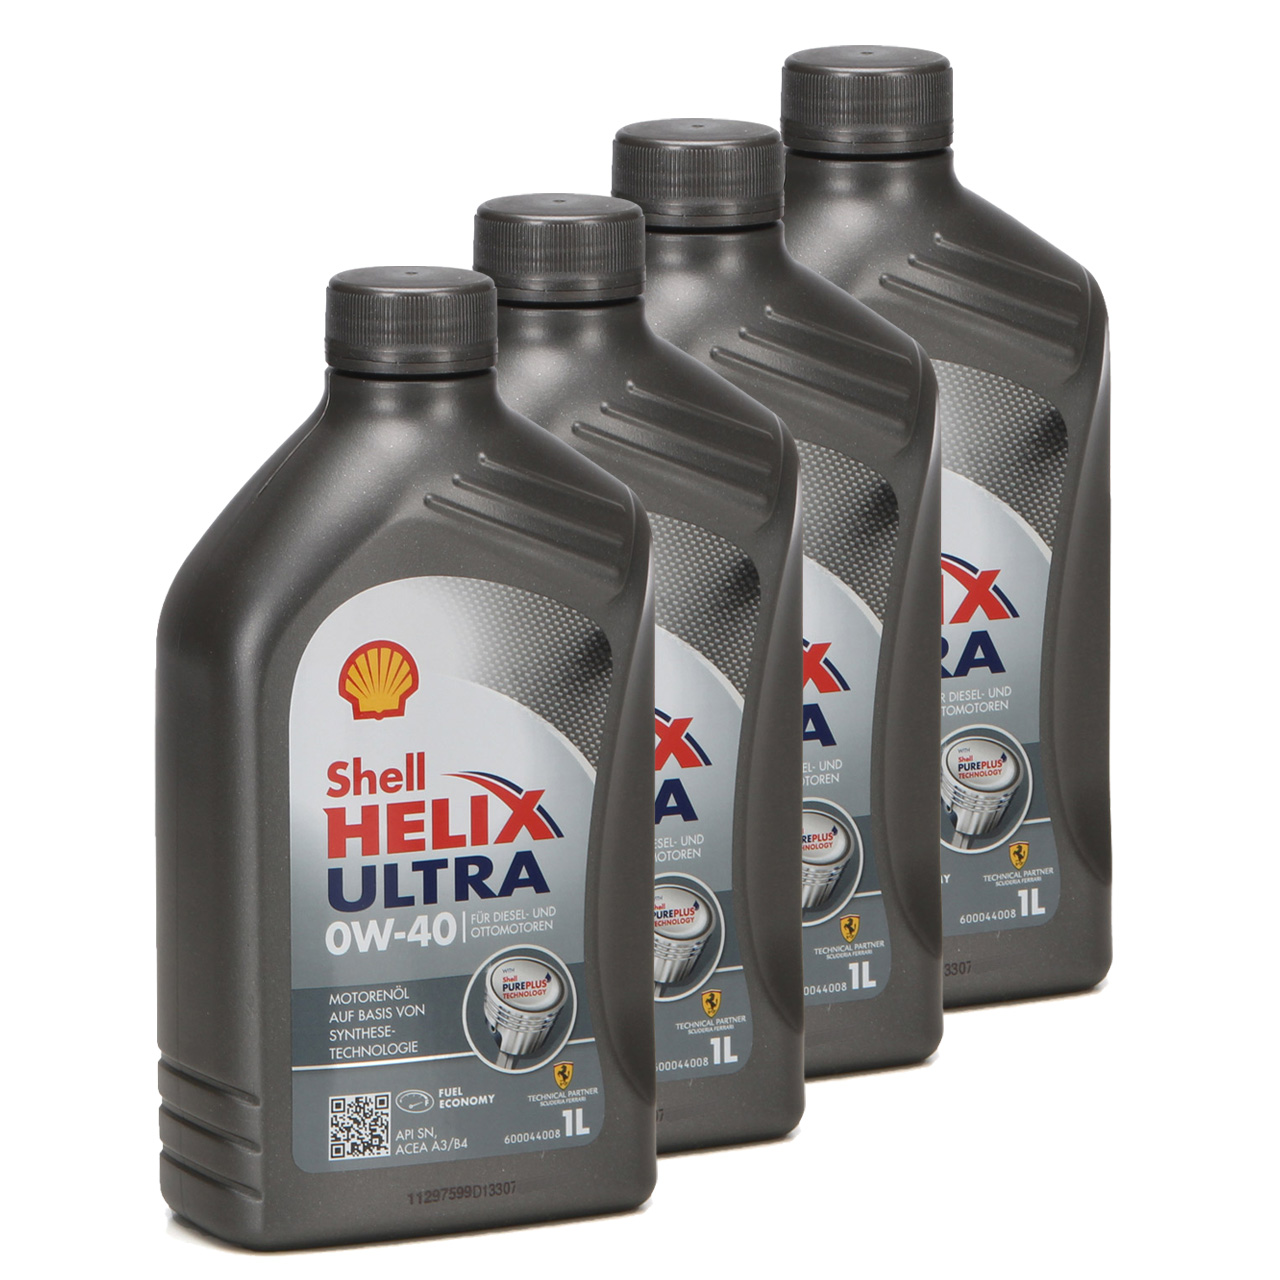 4x 1 Liter SHELL HELIX ULTRA 0W-40 Motoröl Öl MB 229.5/226.5 VW 502.00/505.00